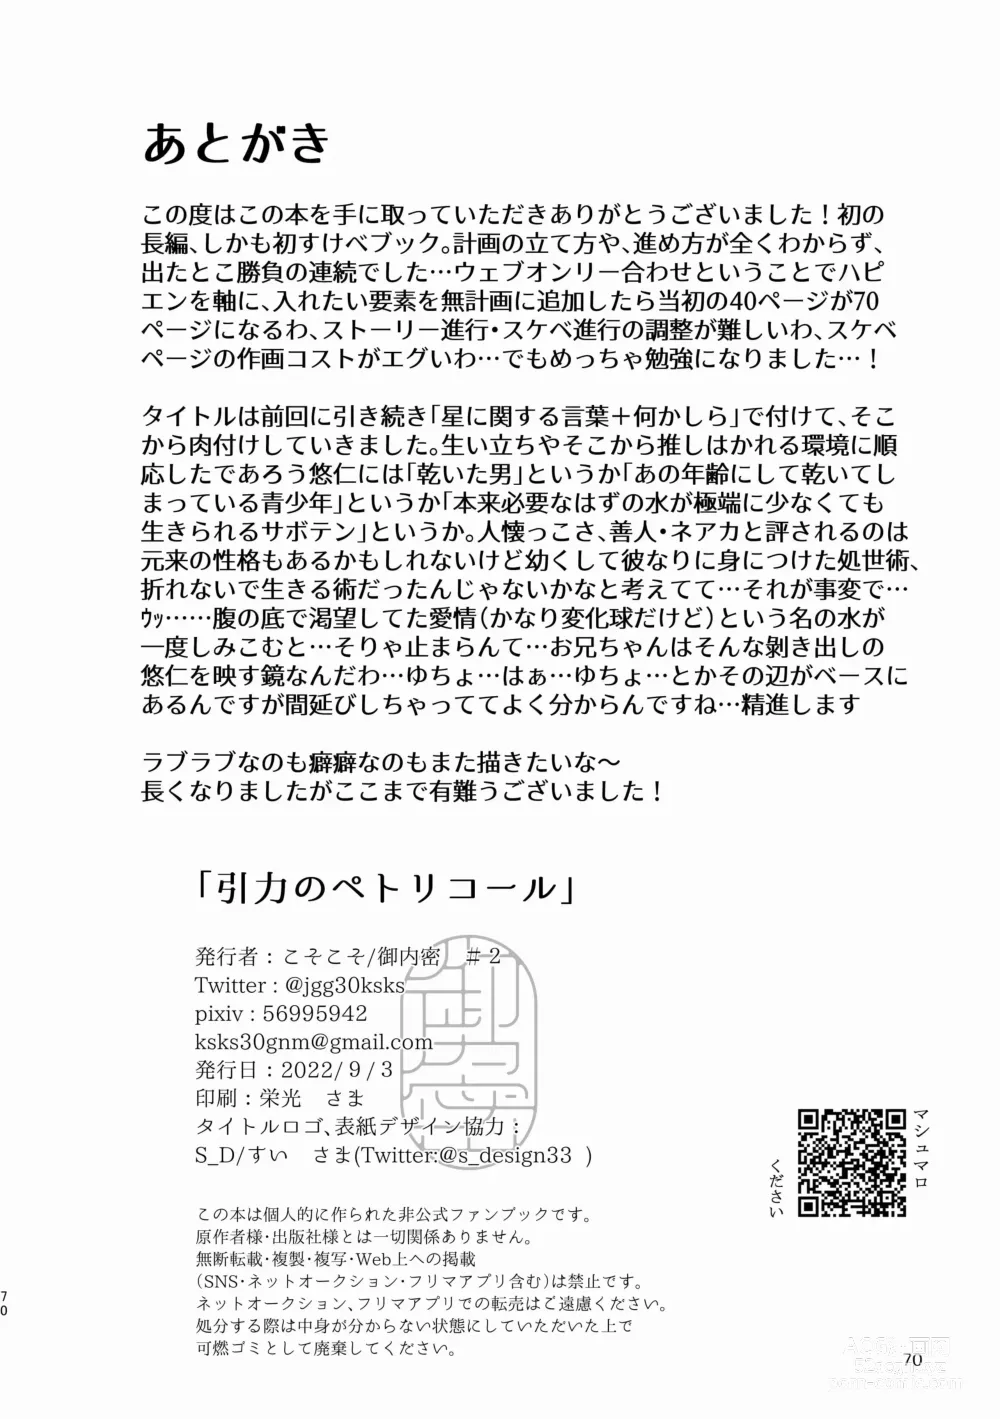 Page 70 of doujinshi Inryoku no Petrichor